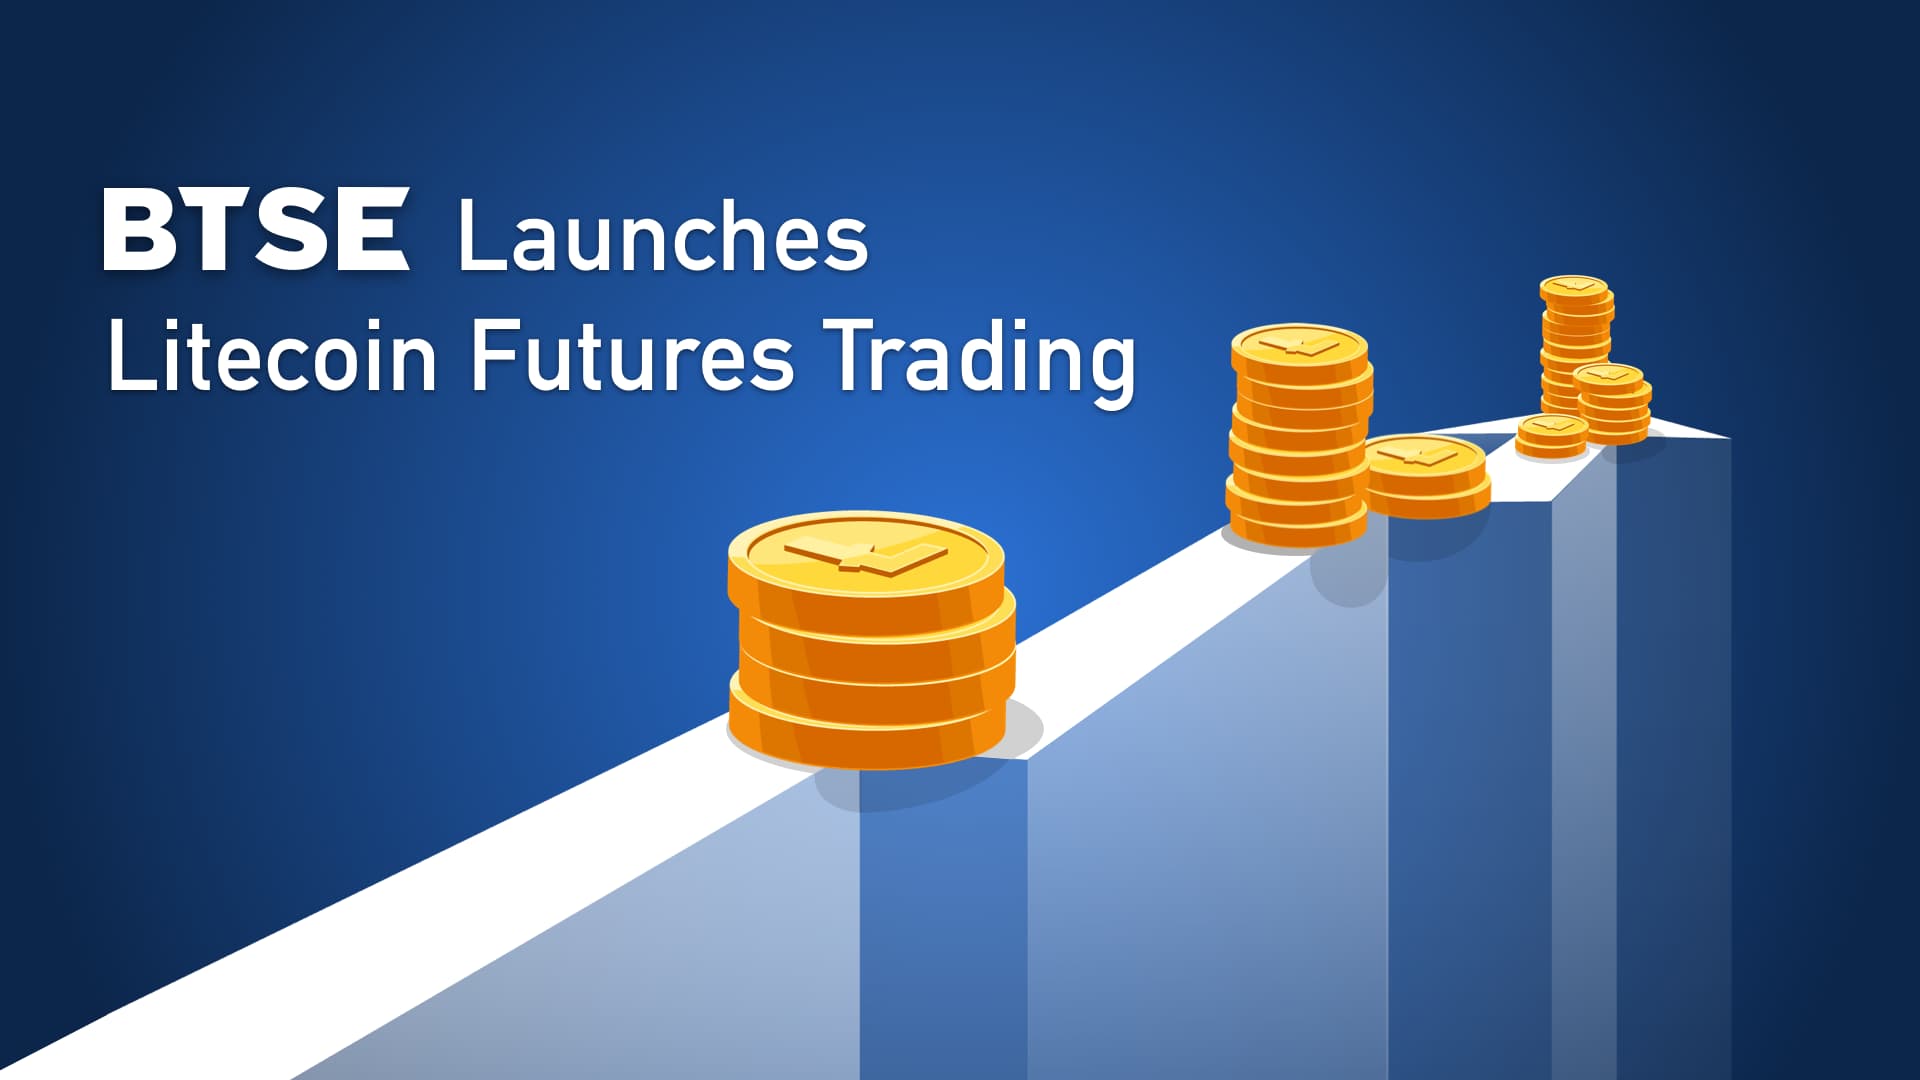 BTSE Launches Litecoin Futures Trading